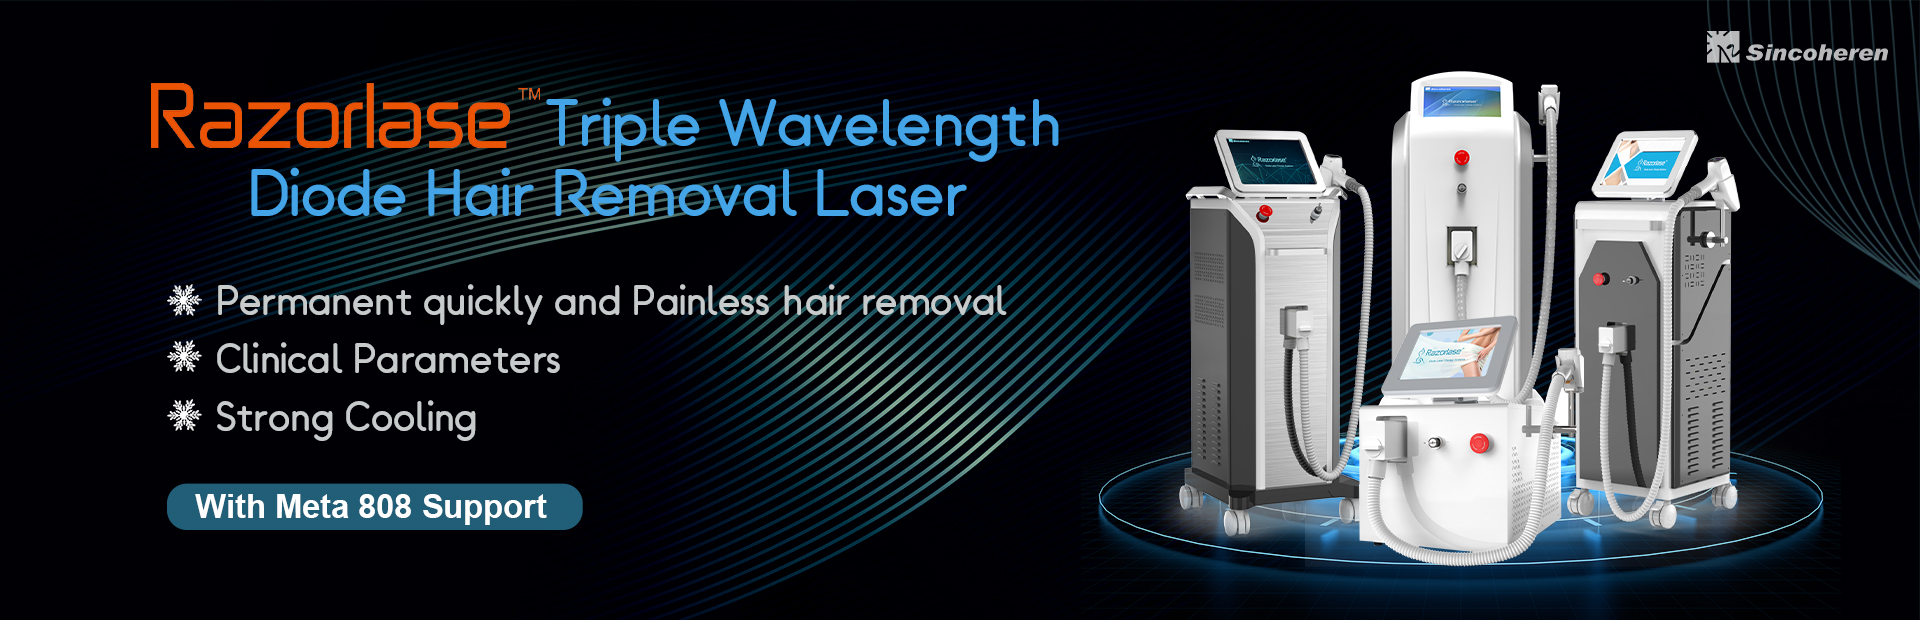 980 Vascular removal laser